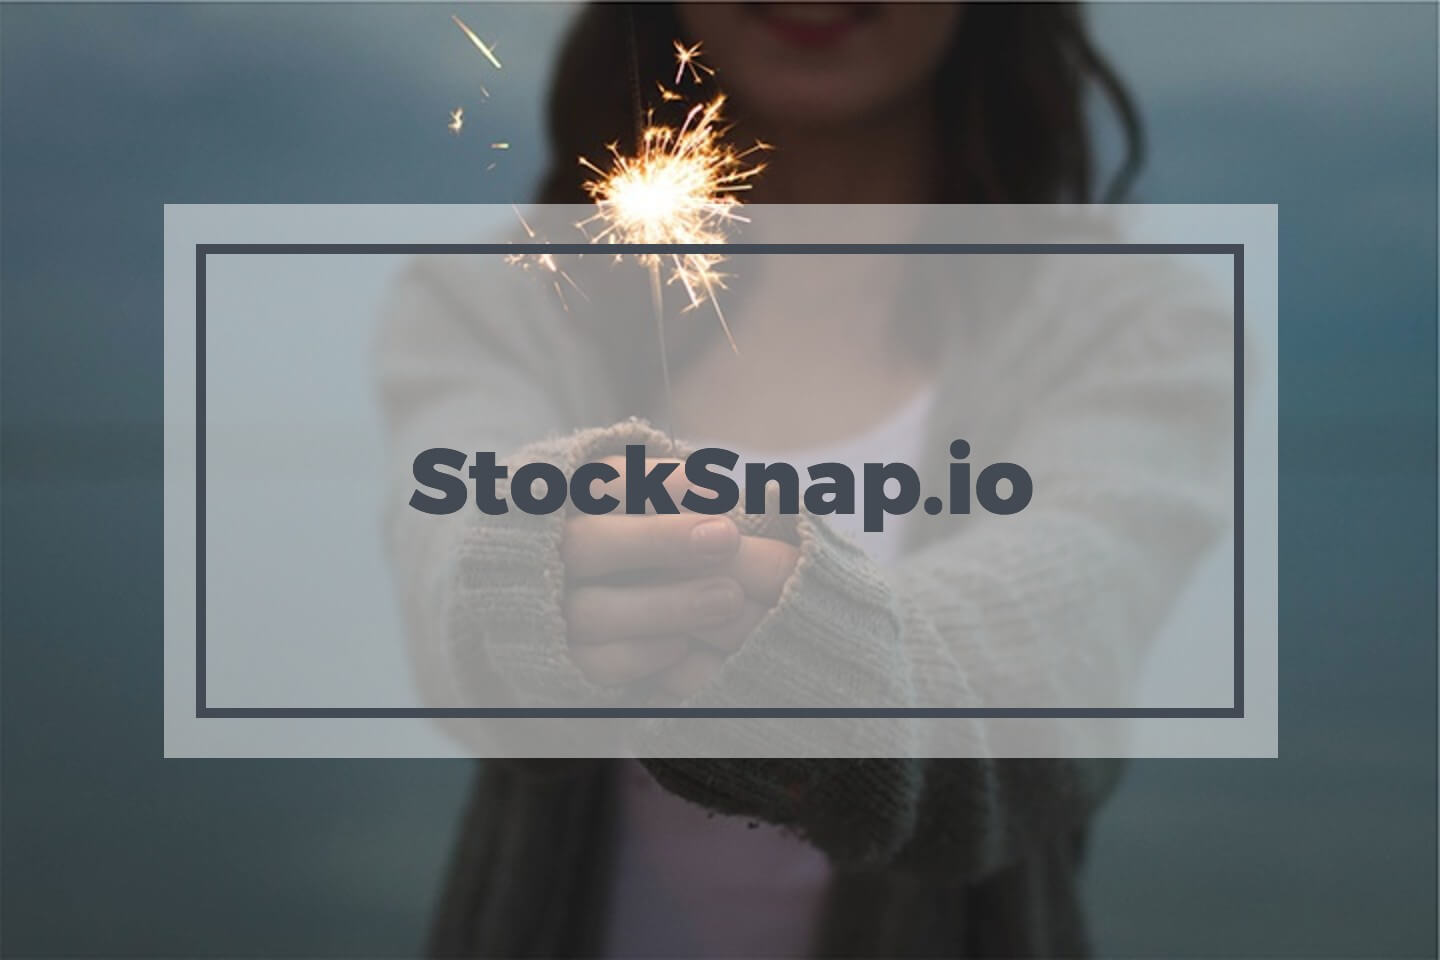 StockSnap free stock photos